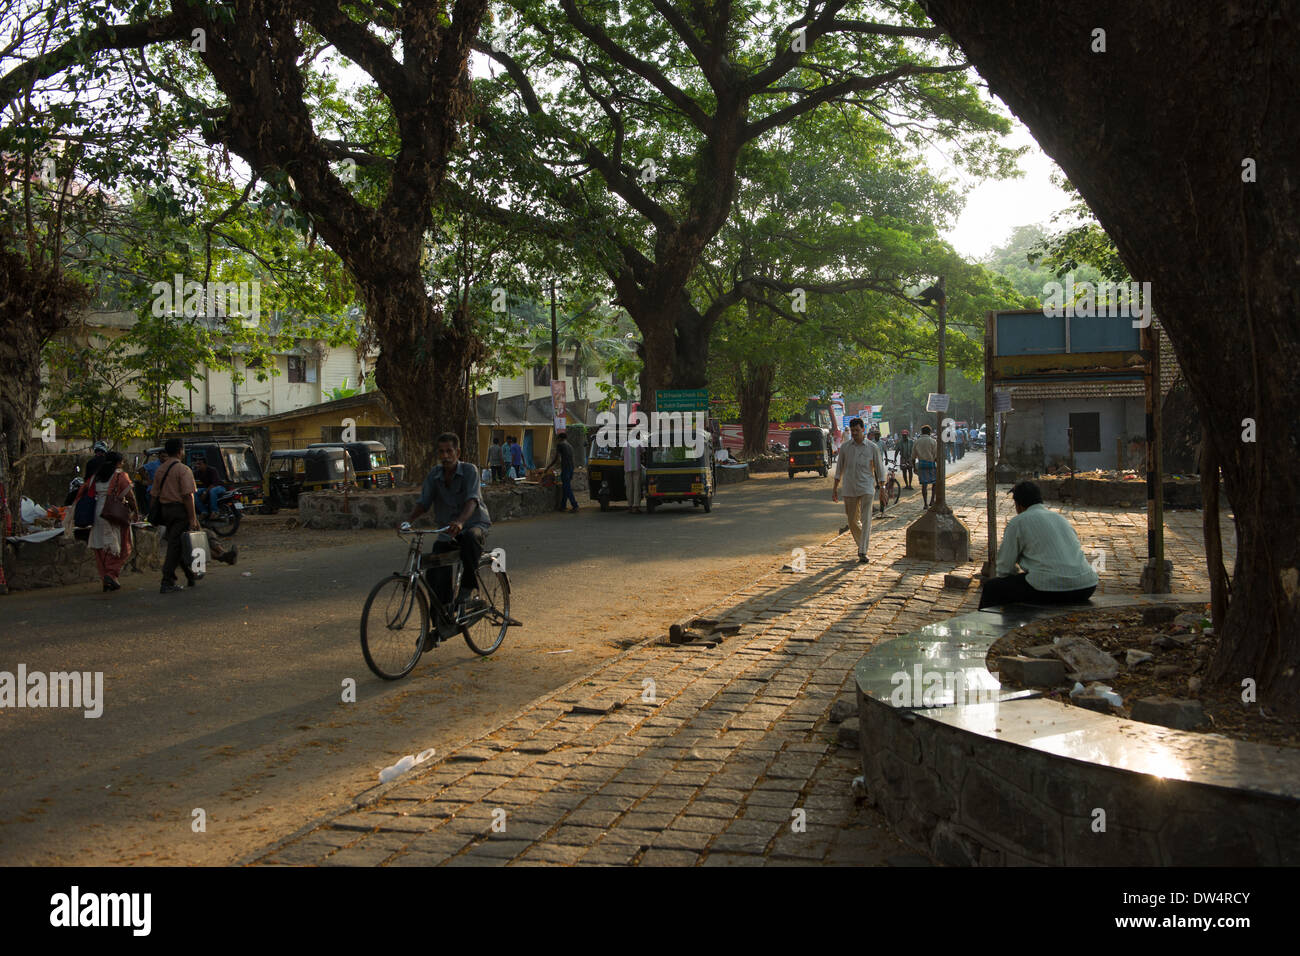 Pedestrians and traffic under the shady trees on KB Jacob Road, Fort Cochin, Kochi (Cochin), Kerala, India Stock Photo